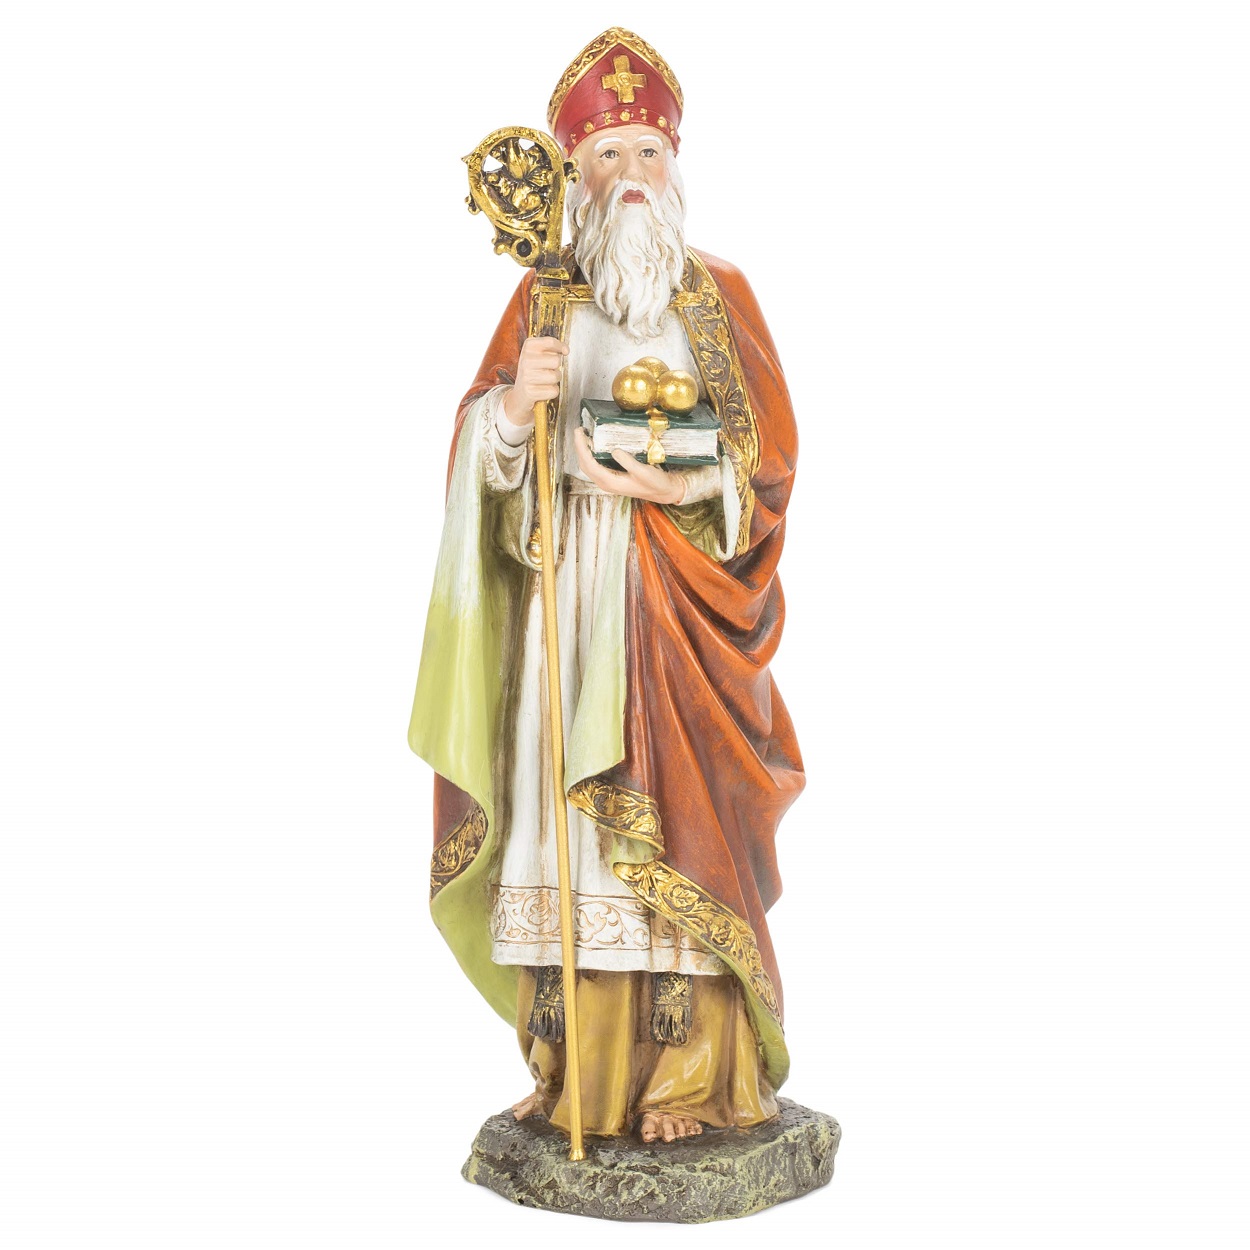 Saint Nicholas Figurine Standing Statue for Christmas Religious Decoration